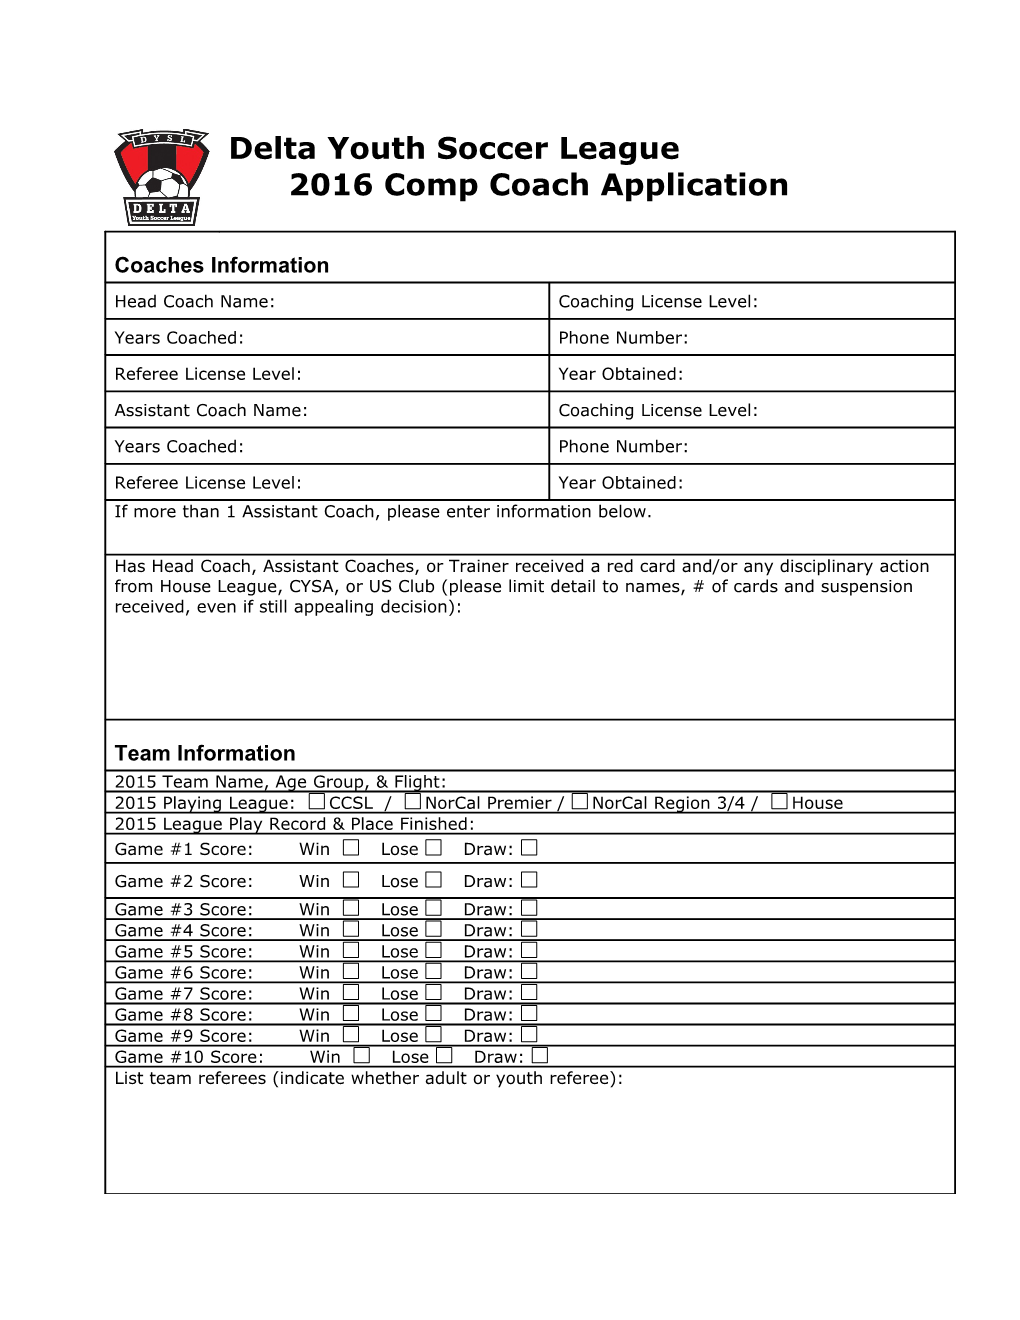 Delta Youth Soccer League2016 Comp Coach Application